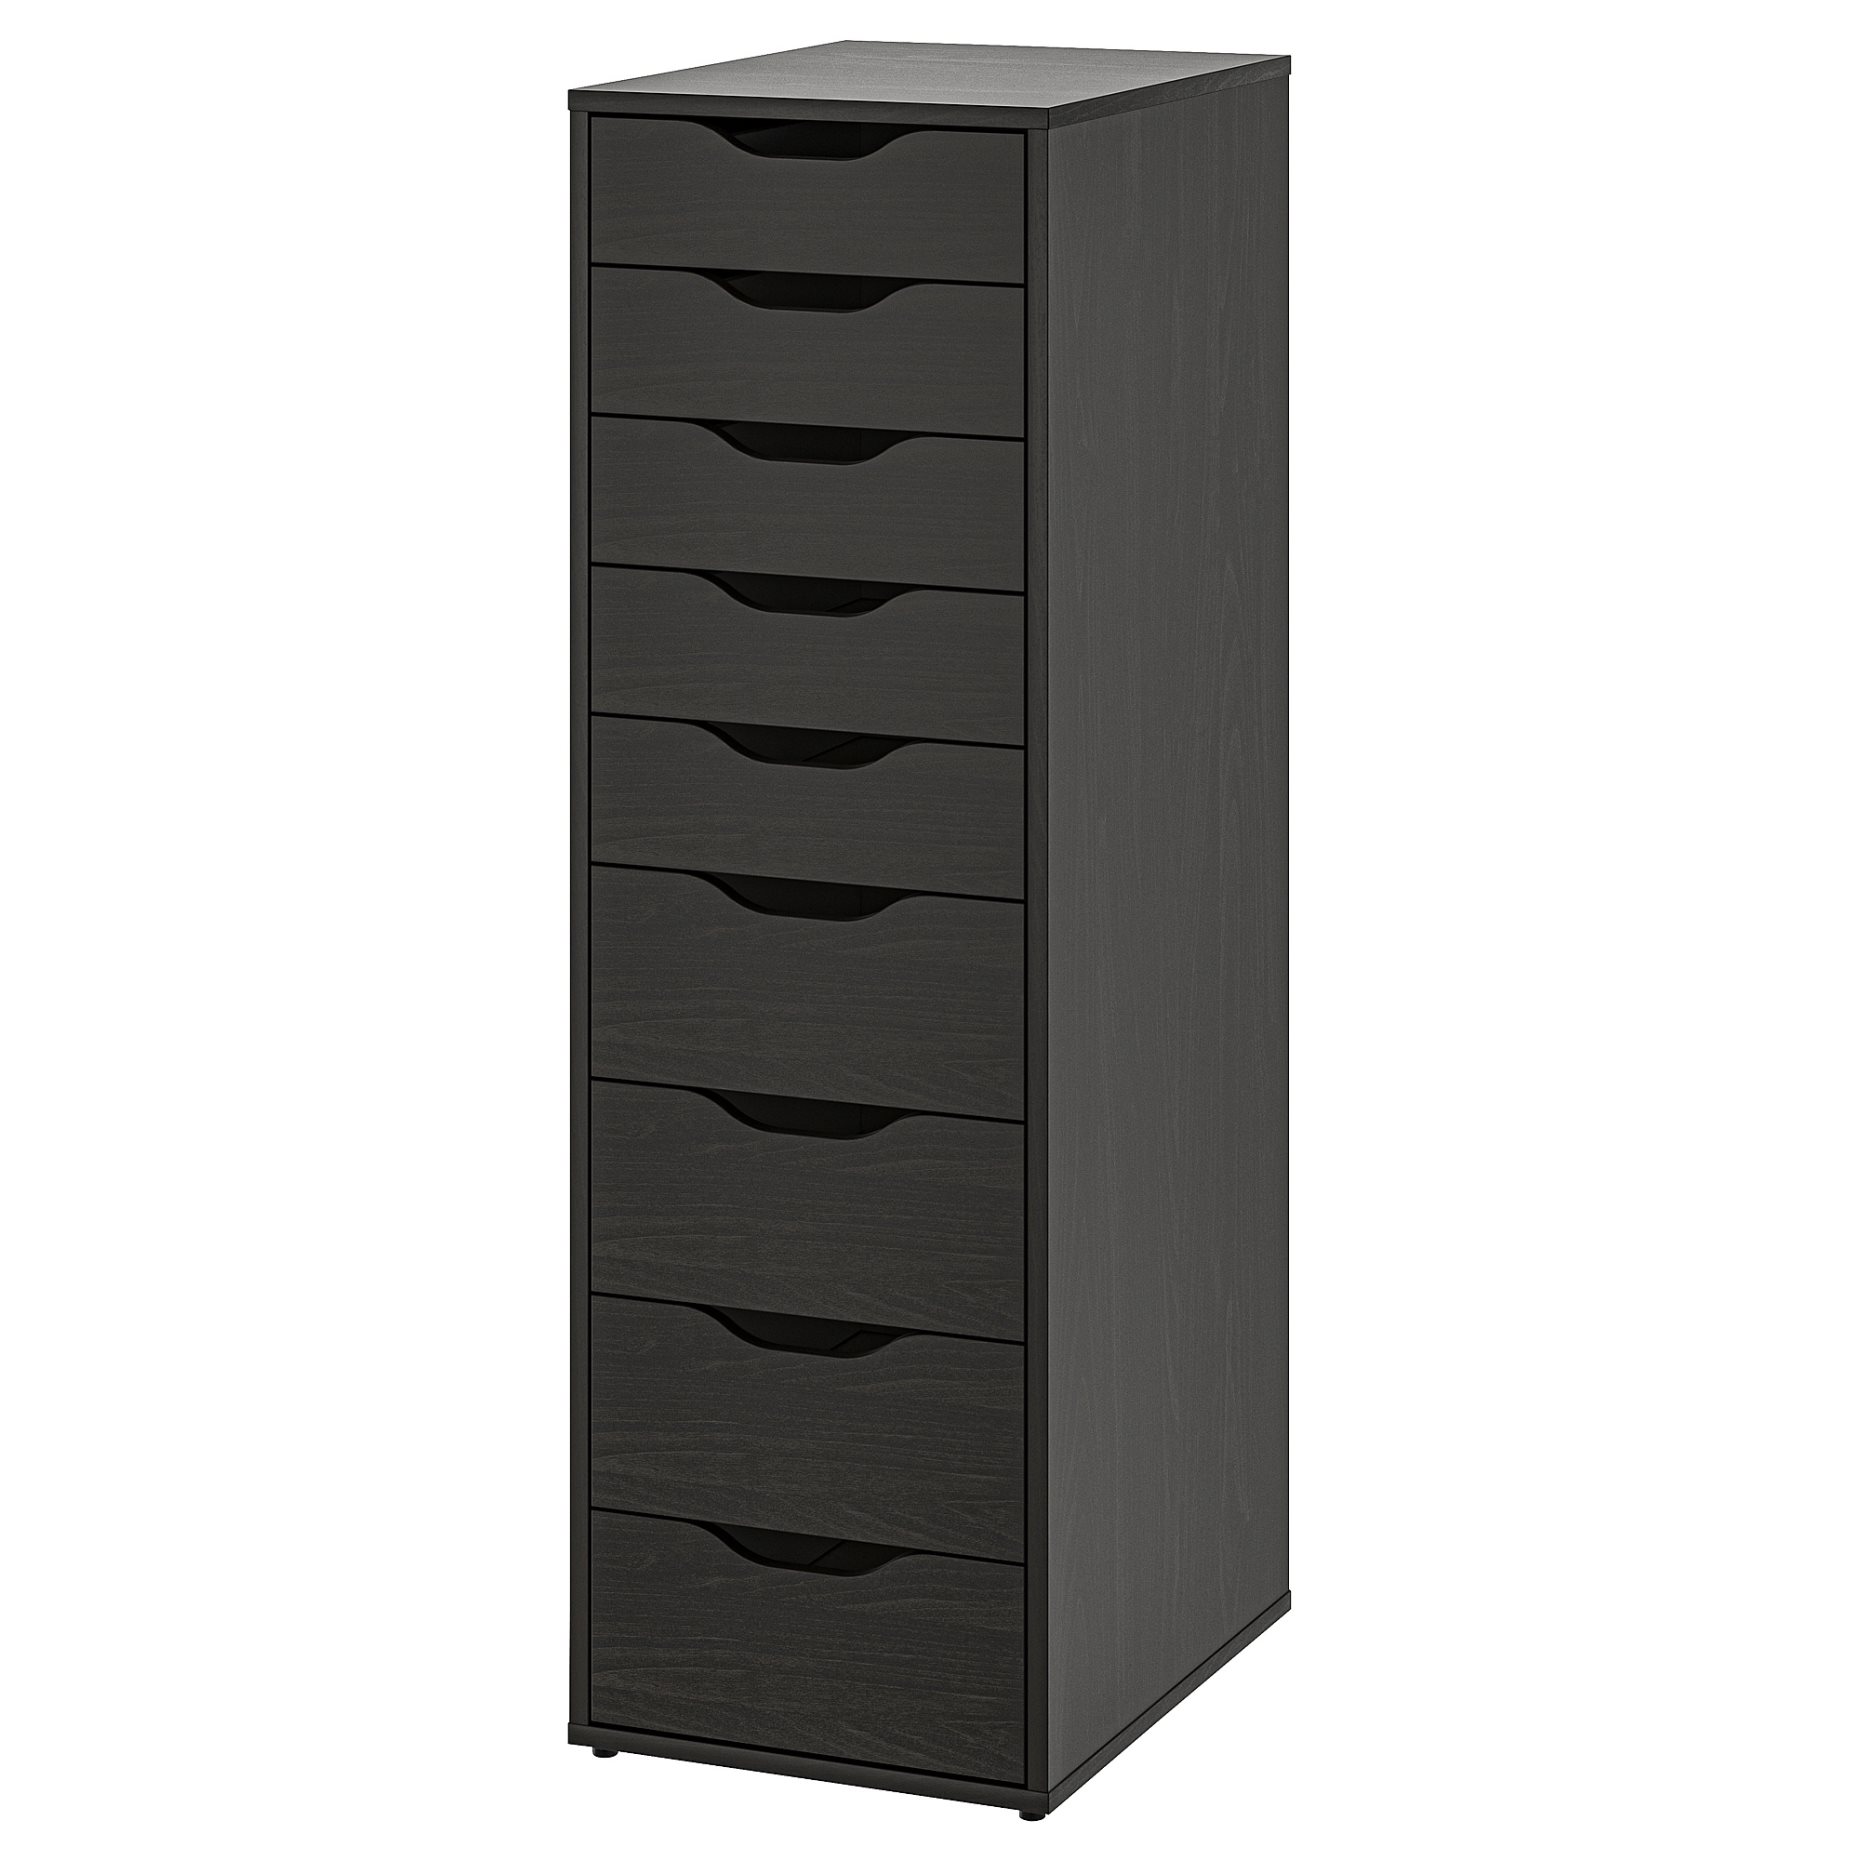 ALEX, drawer unit with 9 drawers, 36x116 cm, 704.834.34